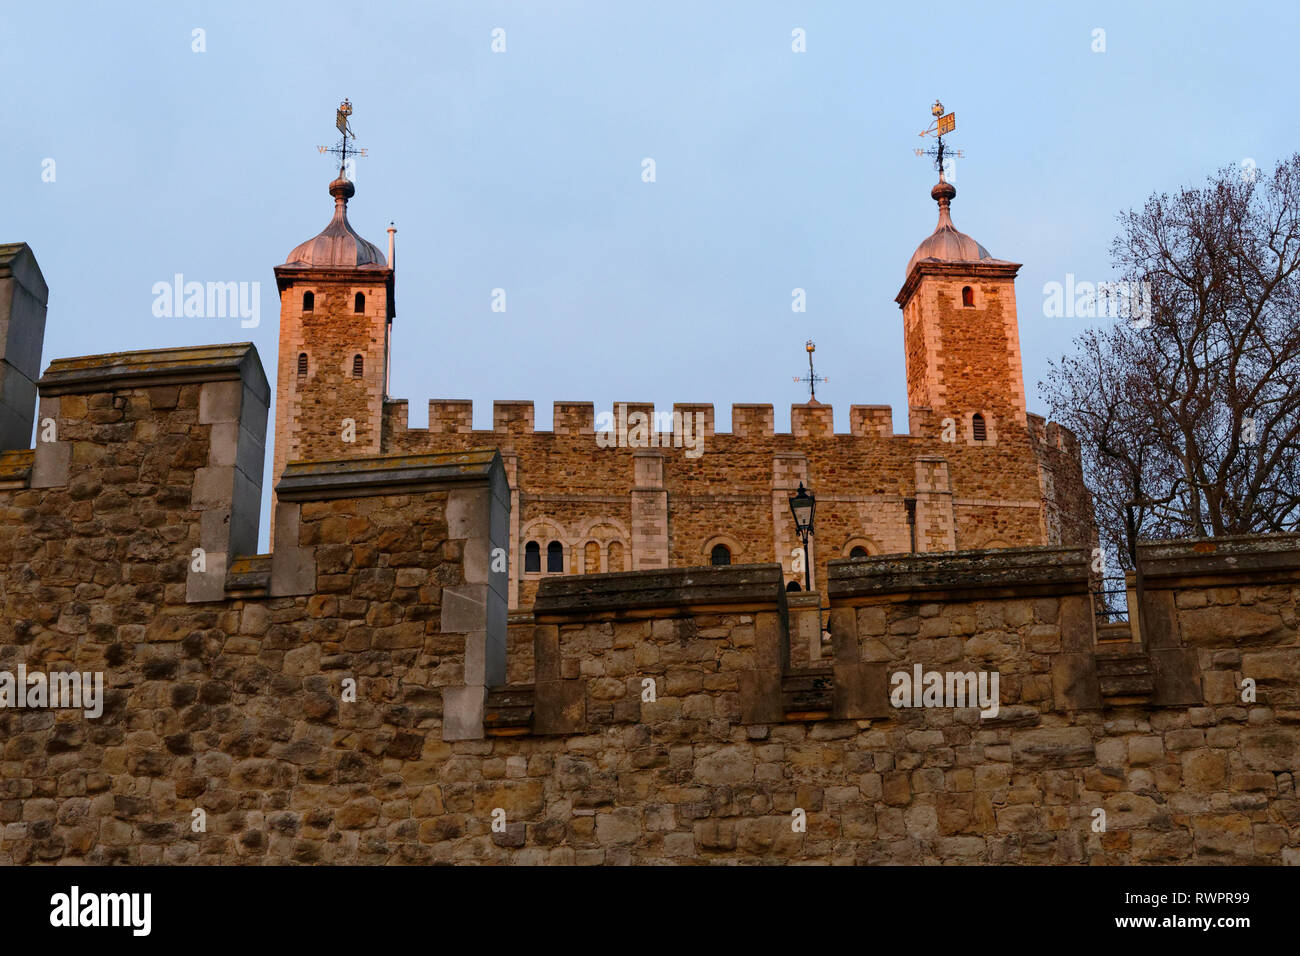 Tower of London, London, United Kingdom. Stock Photo